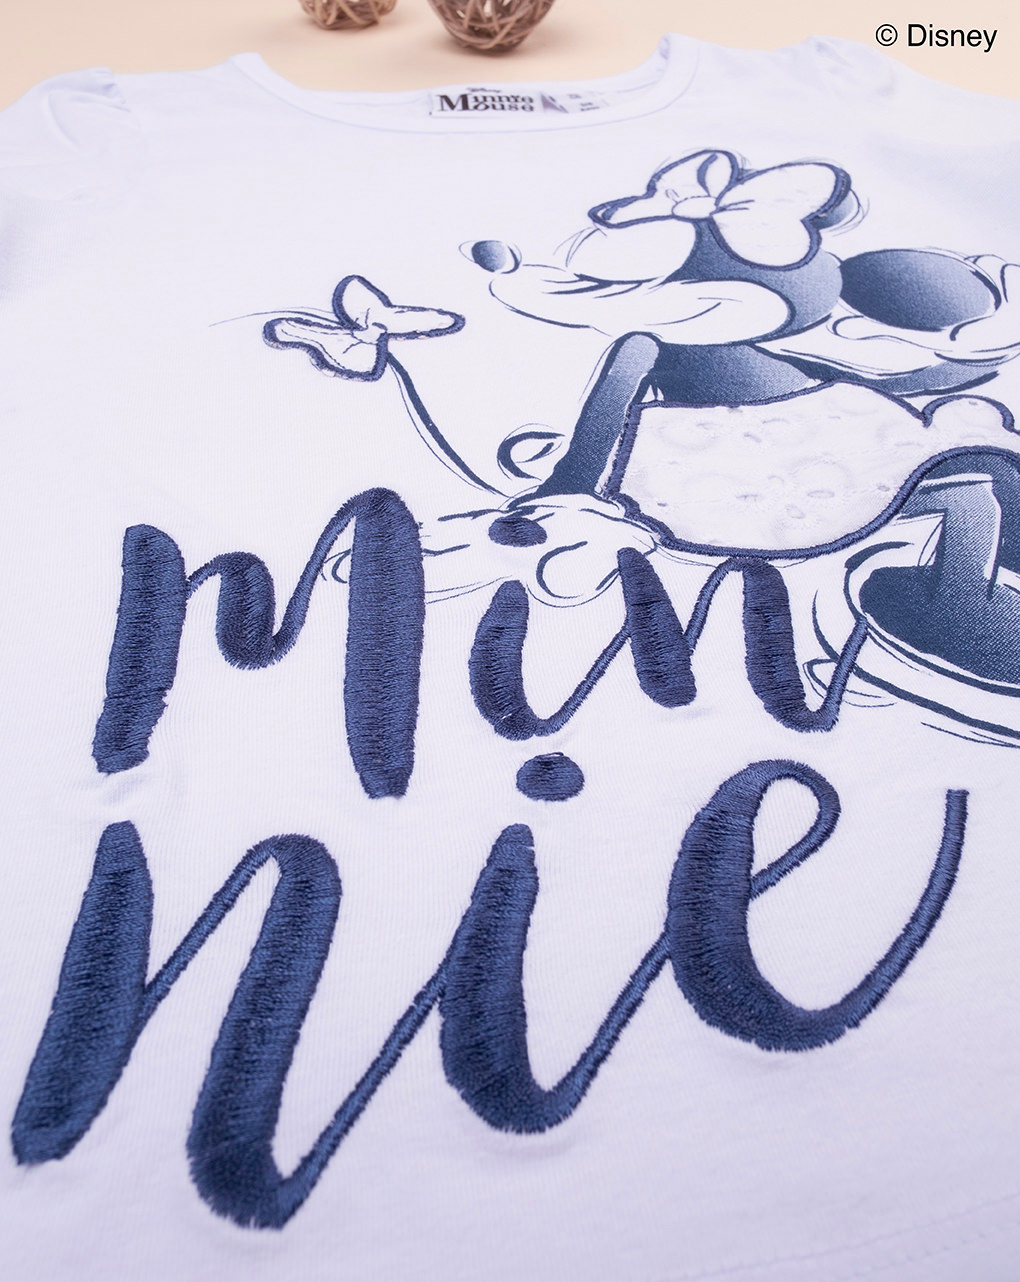 Camiseta  para niña minnie - Prénatal